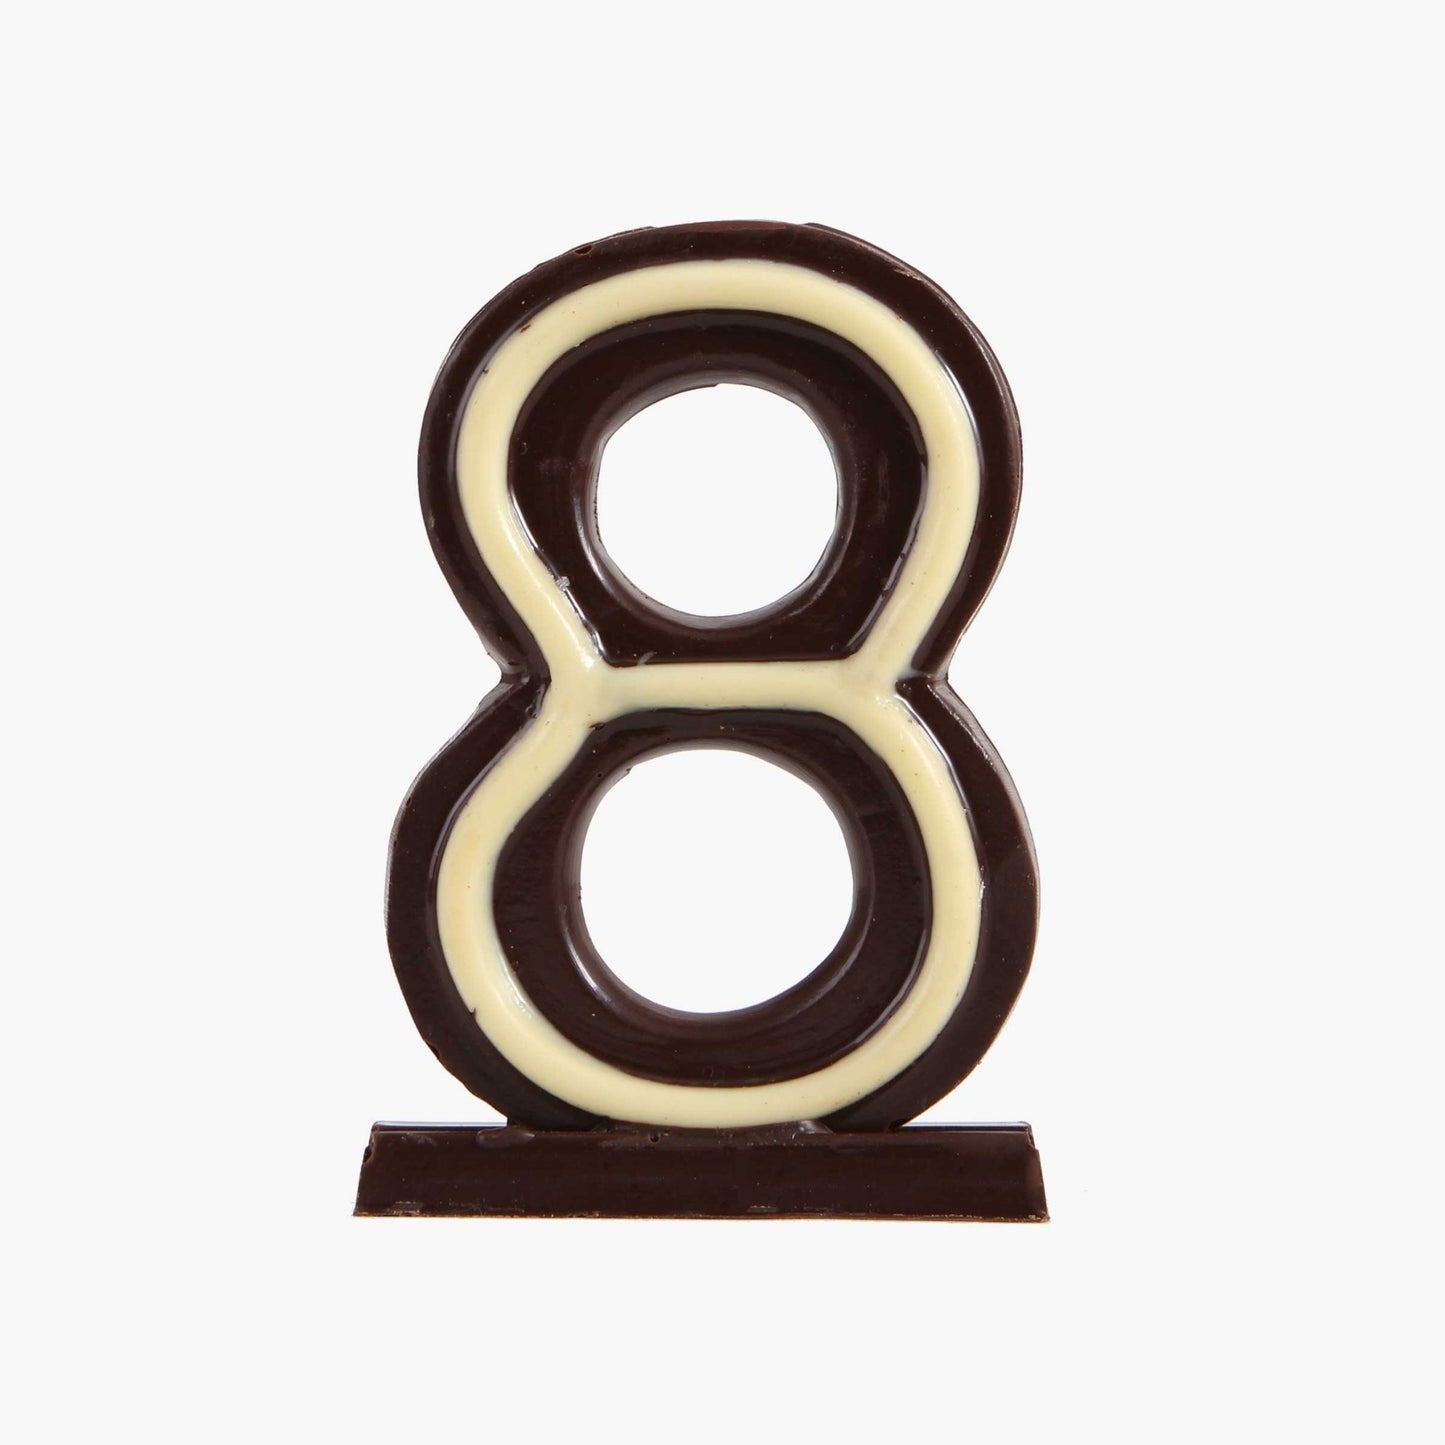 Vela cumpleaños de chocolate - Nº8 - Bombonería Pons -